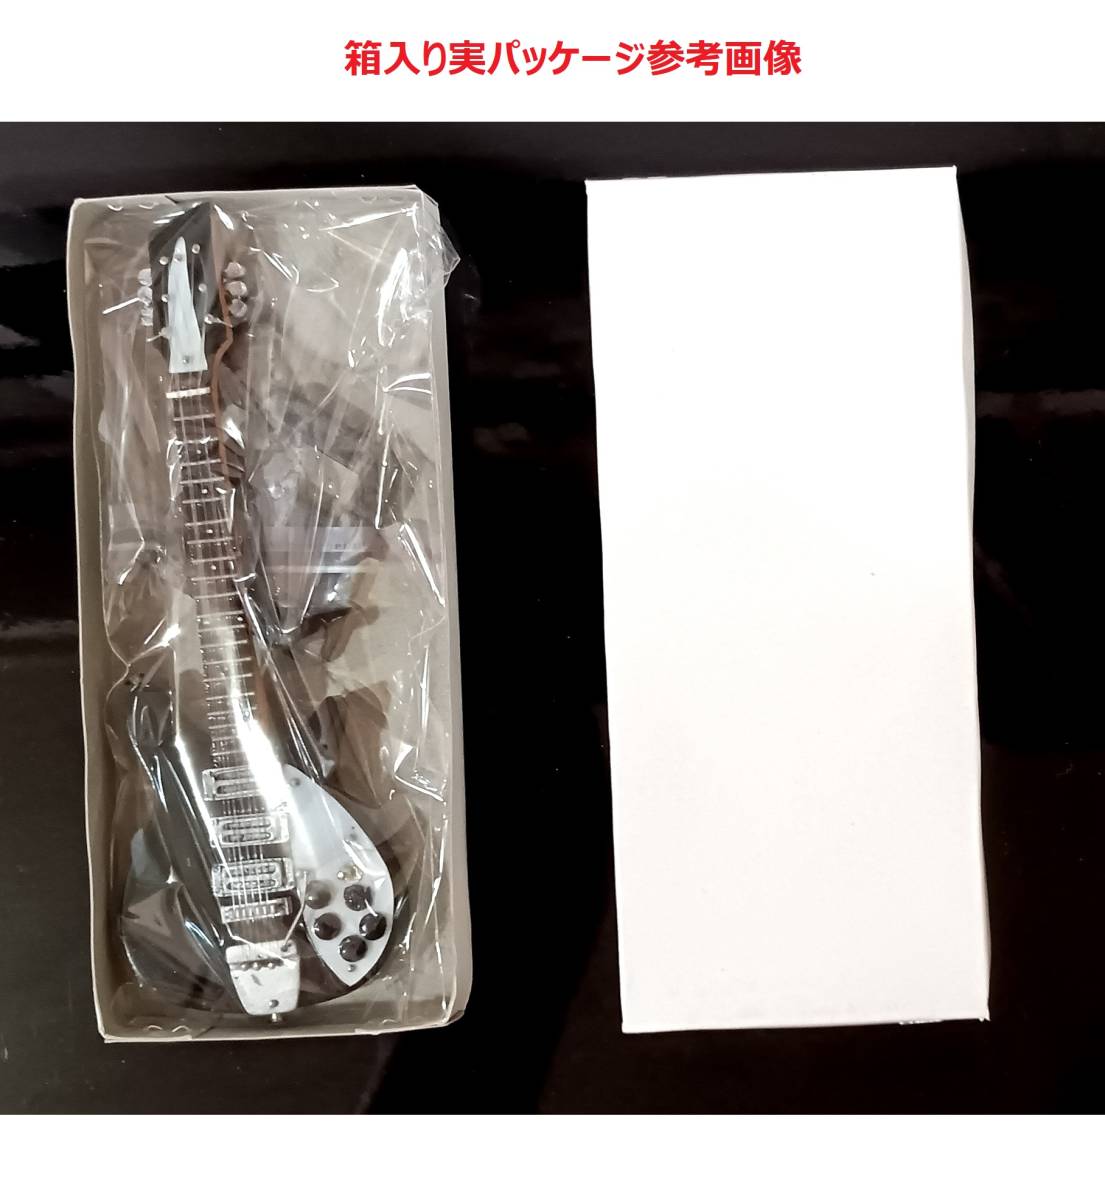 GH George Harrison миниатюра гитара 15 cm. Mini музыкальные инструменты 